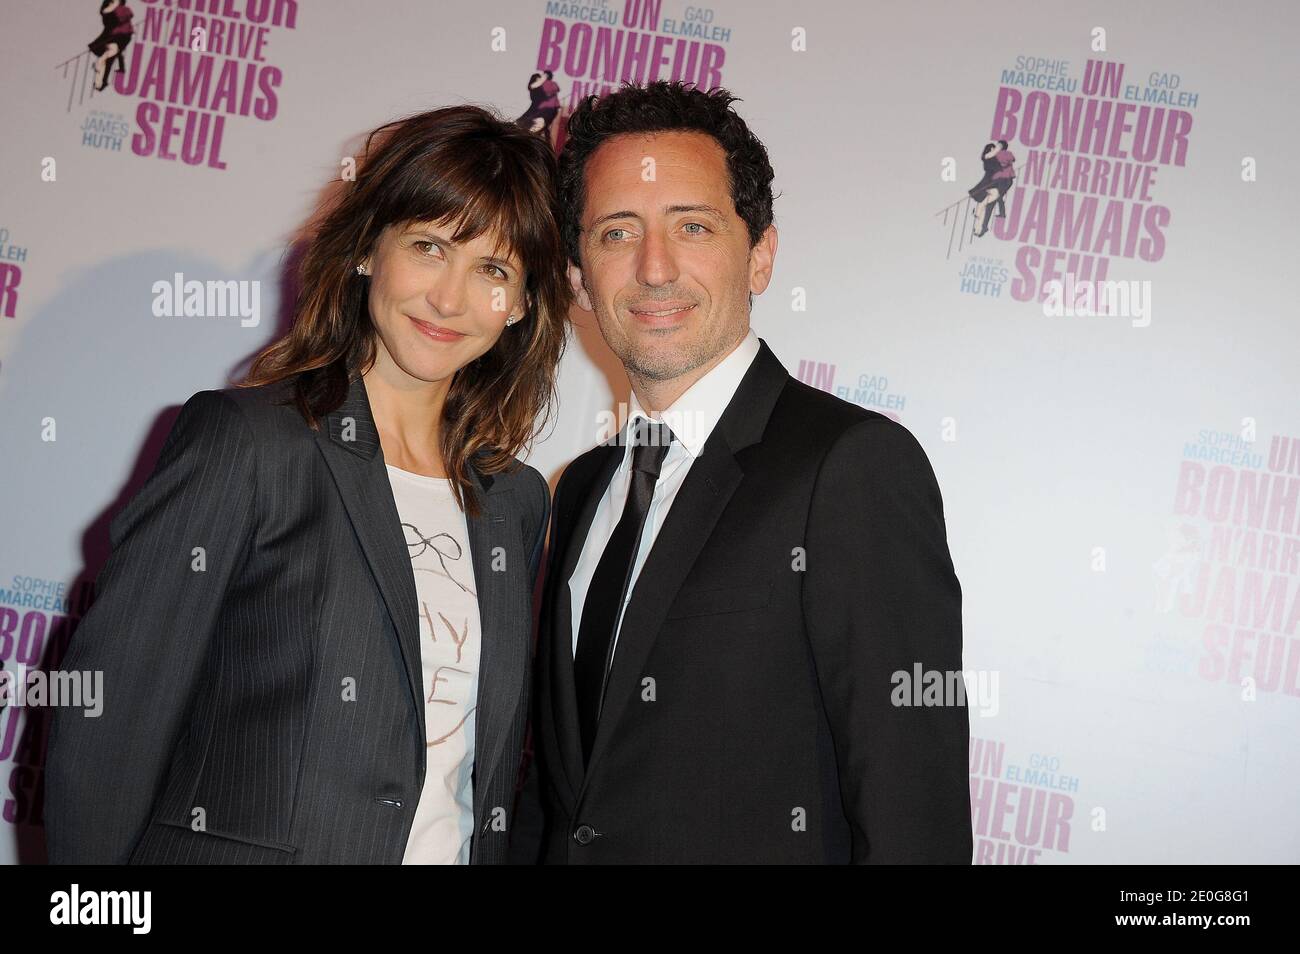 Sophie Marceau and Gad Elmaleh attending the premiere of 'Un bonheur  n'arrive jamais seul' held